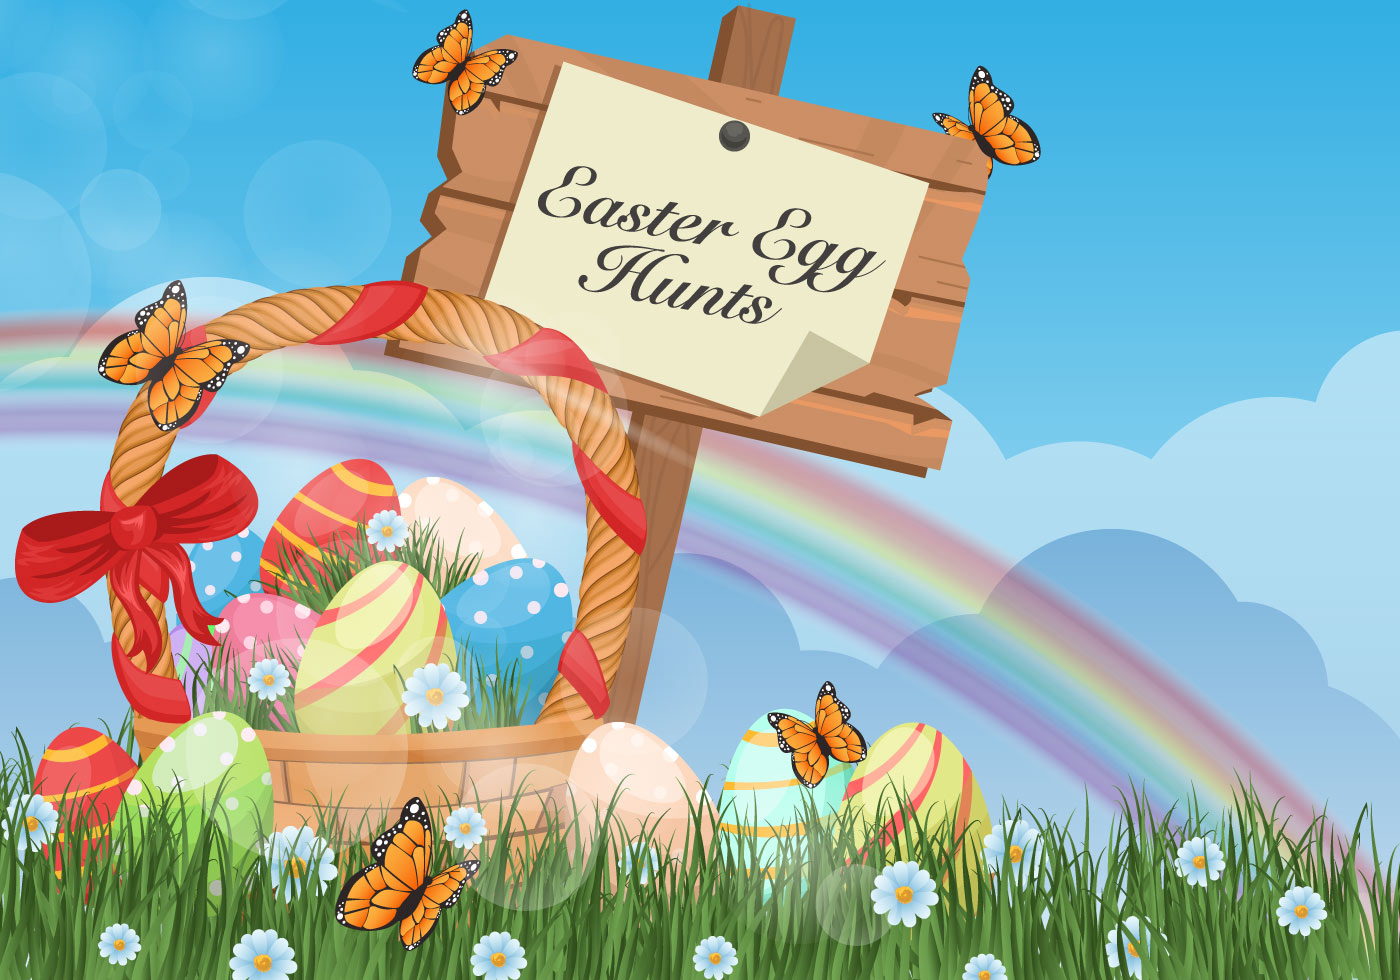 Download Easter Egg Hunt Background 145218 - Download Free Vectors, Clipart Graphics & Vector Art